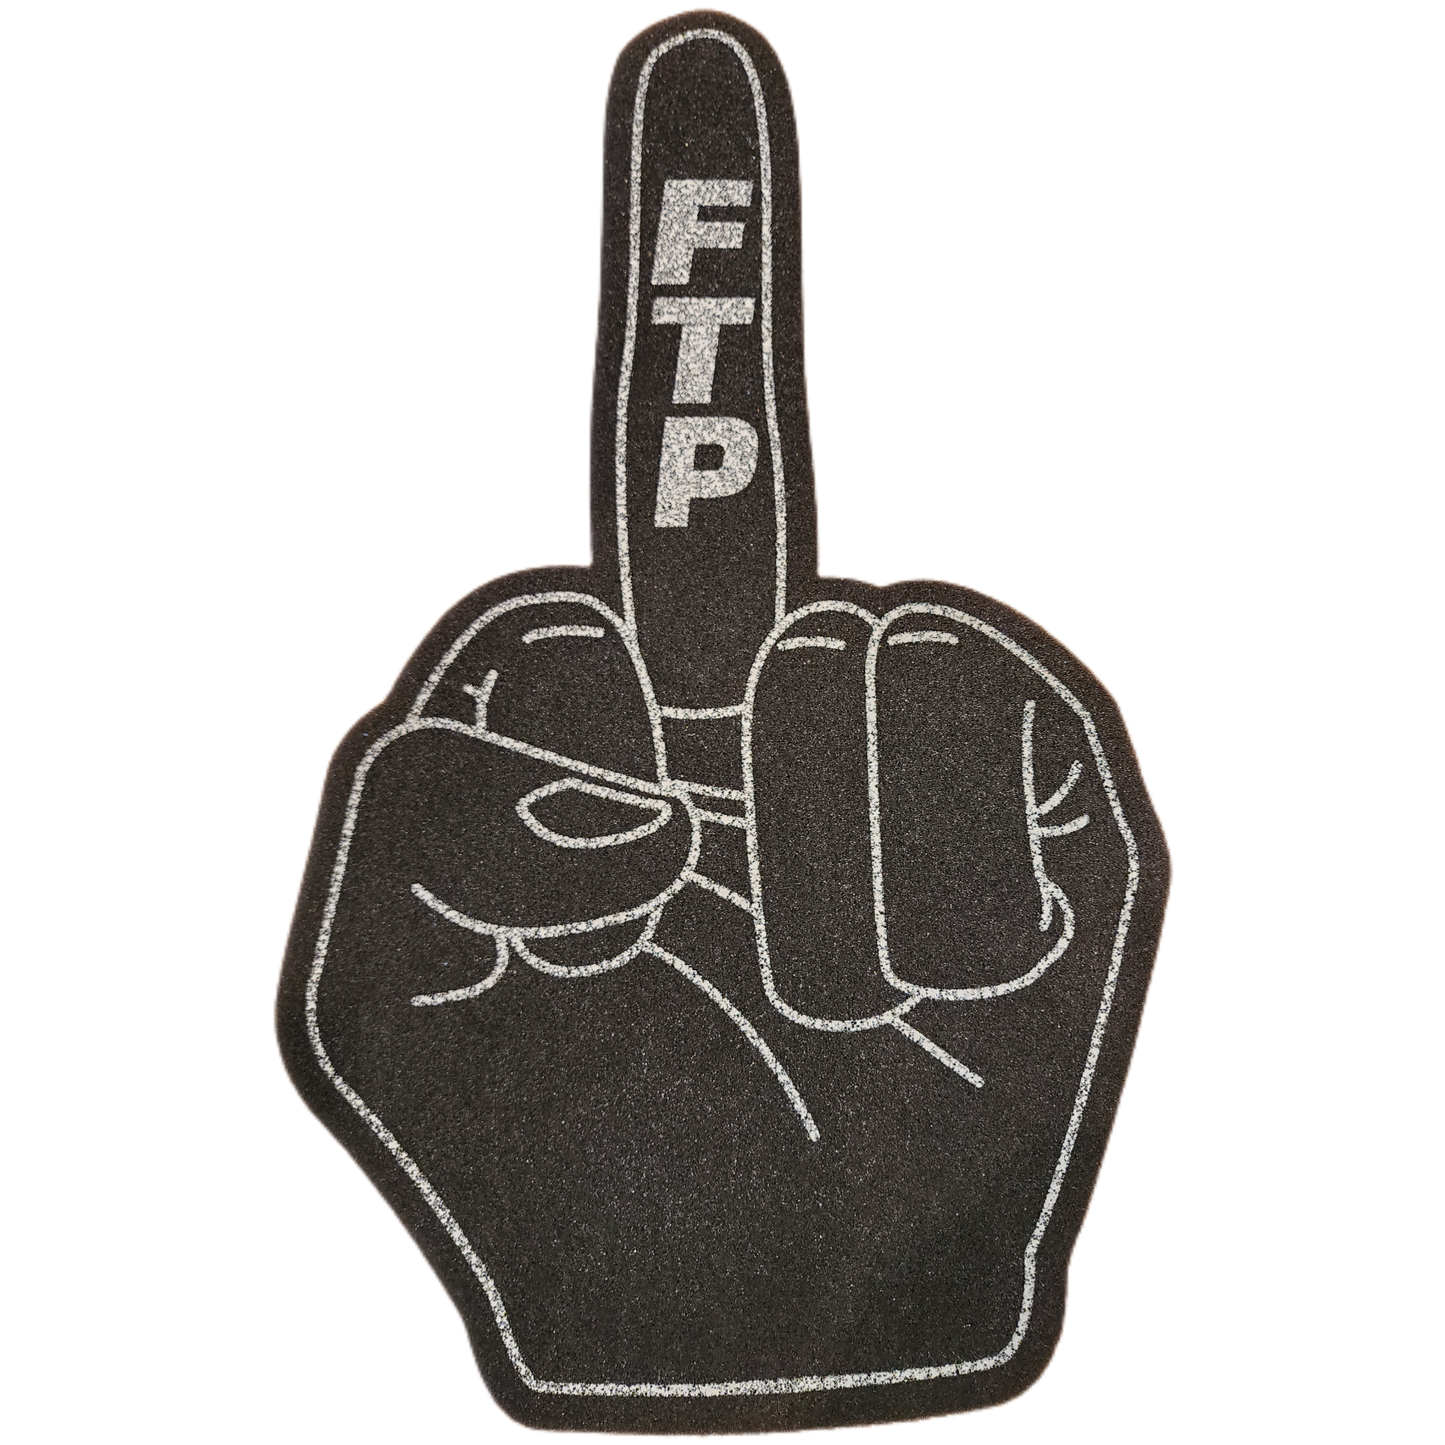 FTP - "Foam Finger" - Black